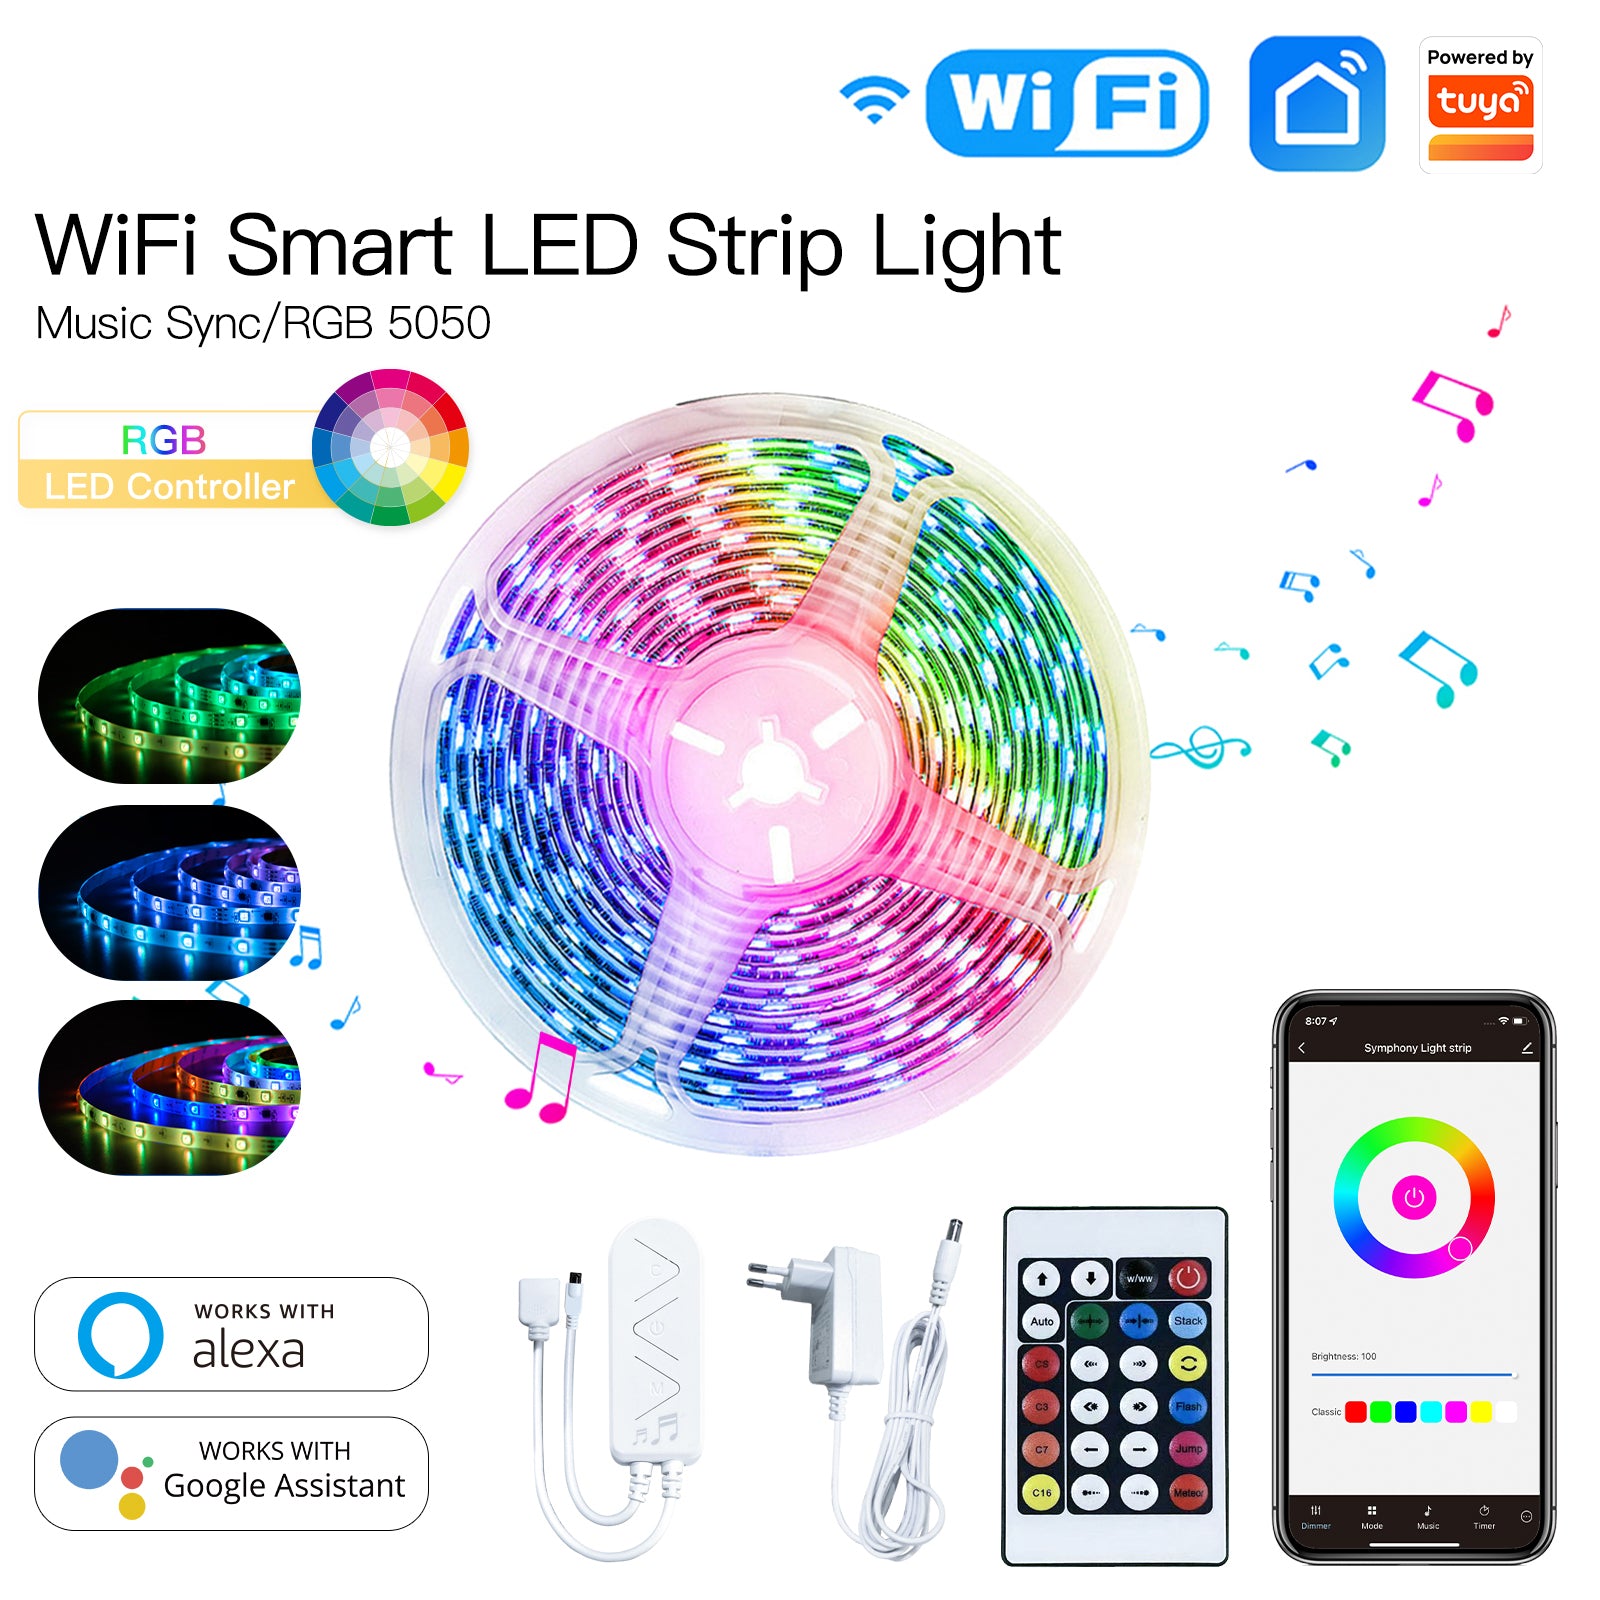 WiFi Smart L ED Strip Light Music Sync/RGB 5050